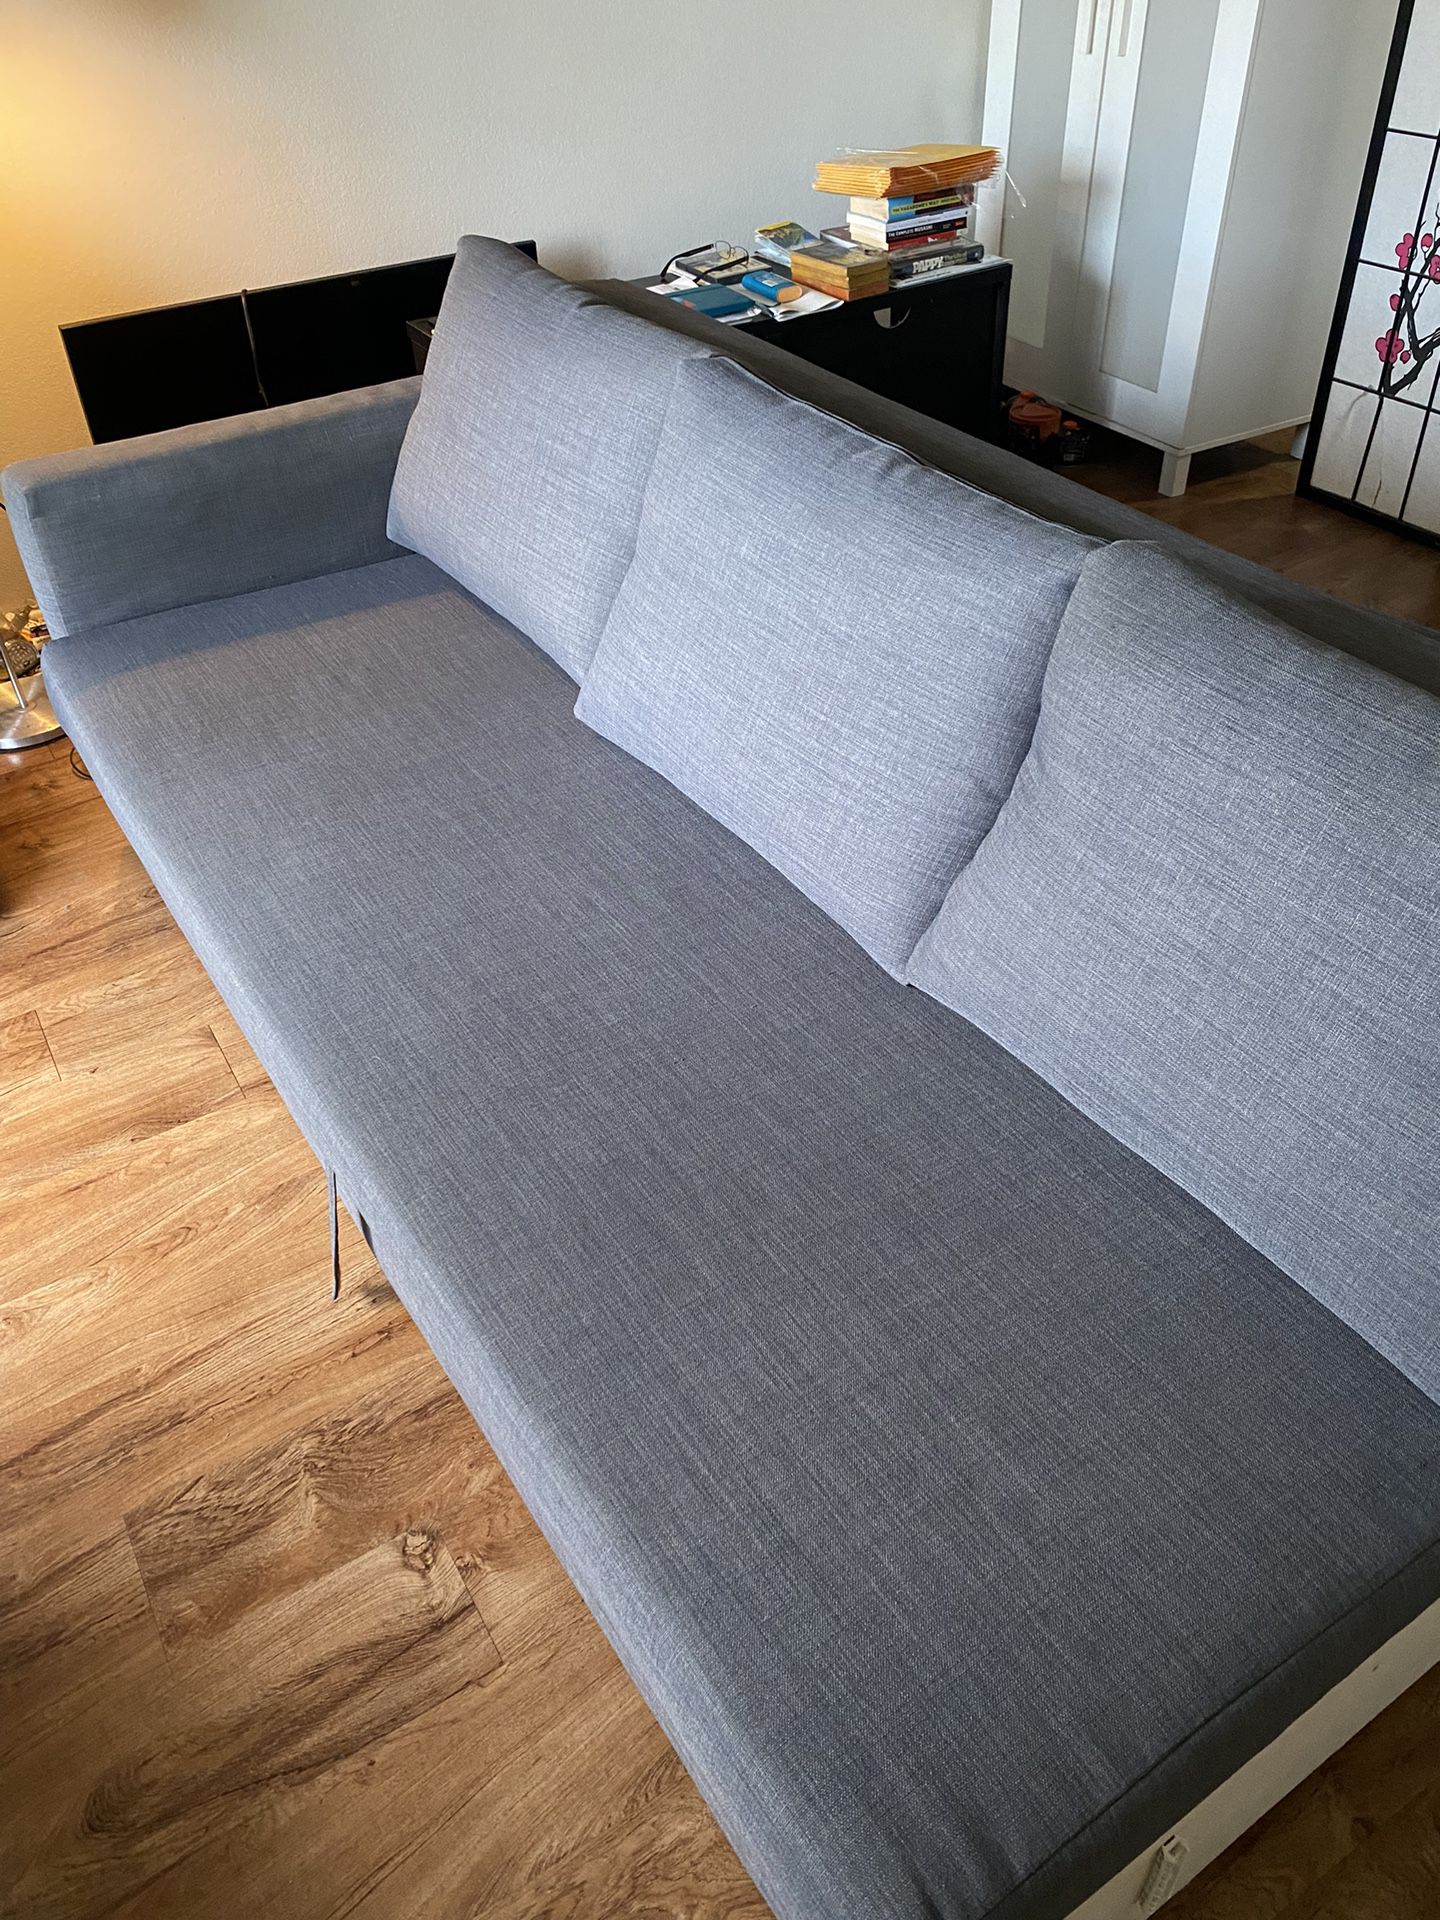 IKEA Fold Out Couch ( Friheten)